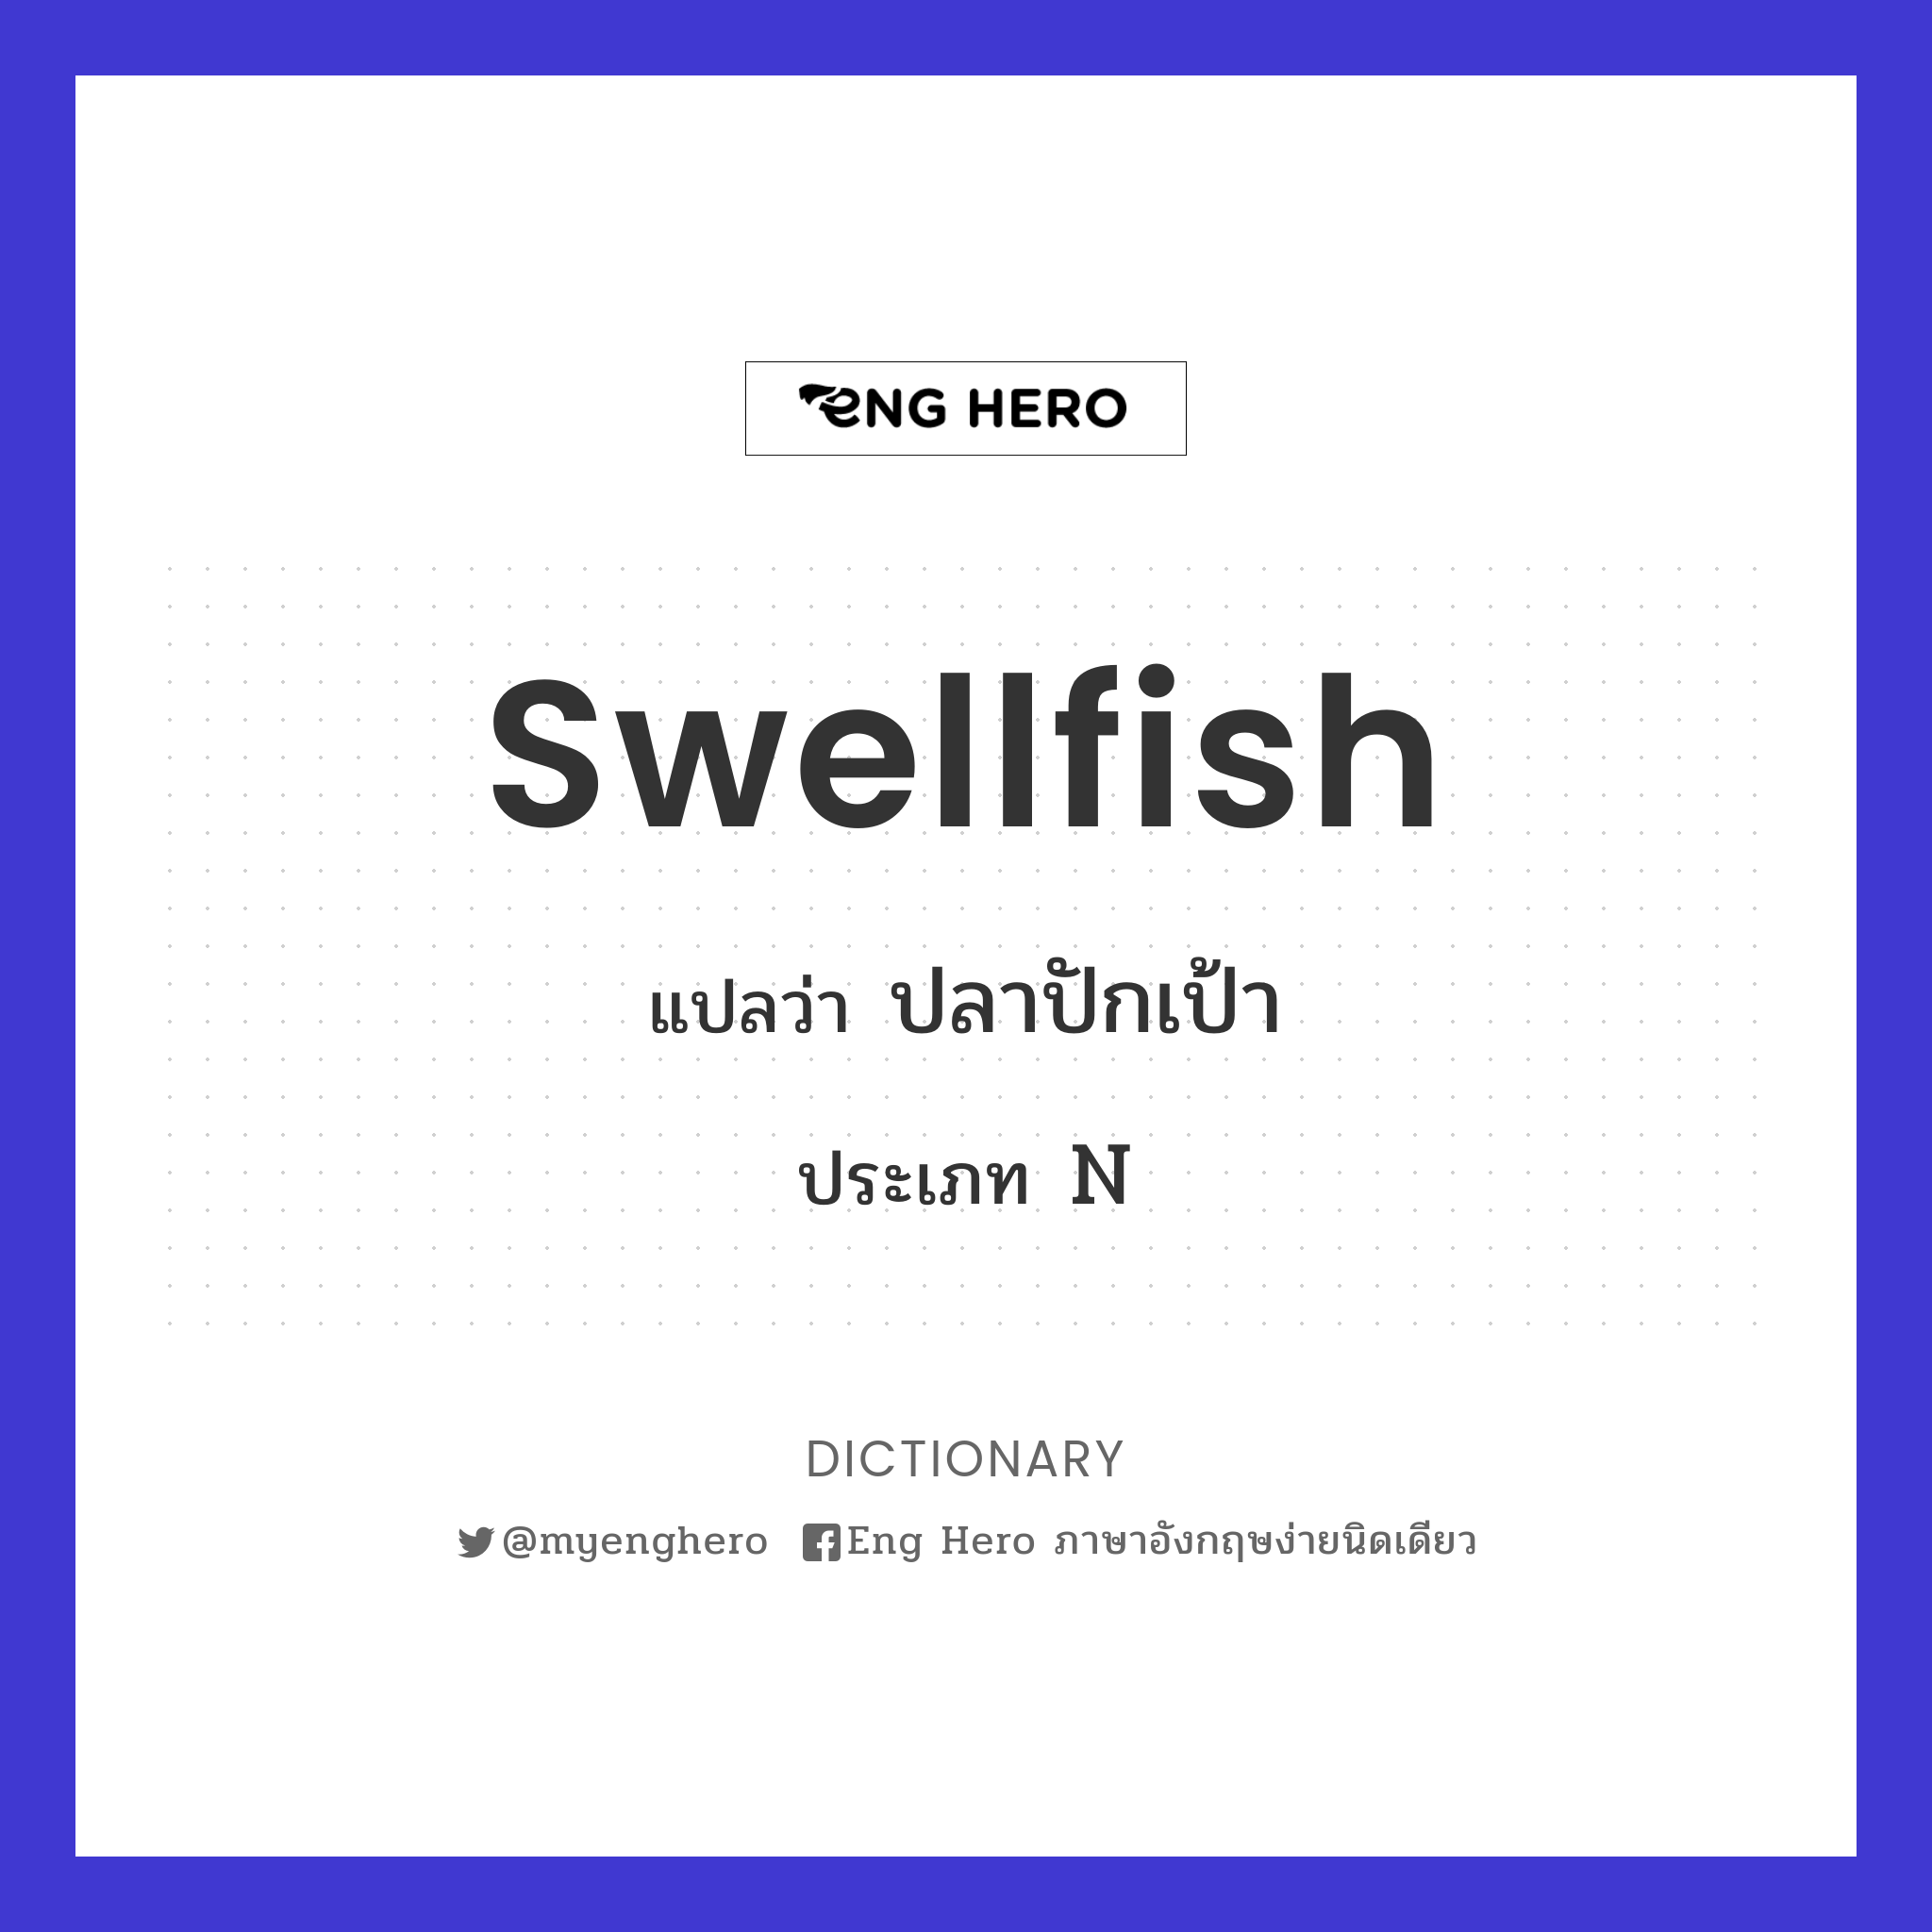 swellfish